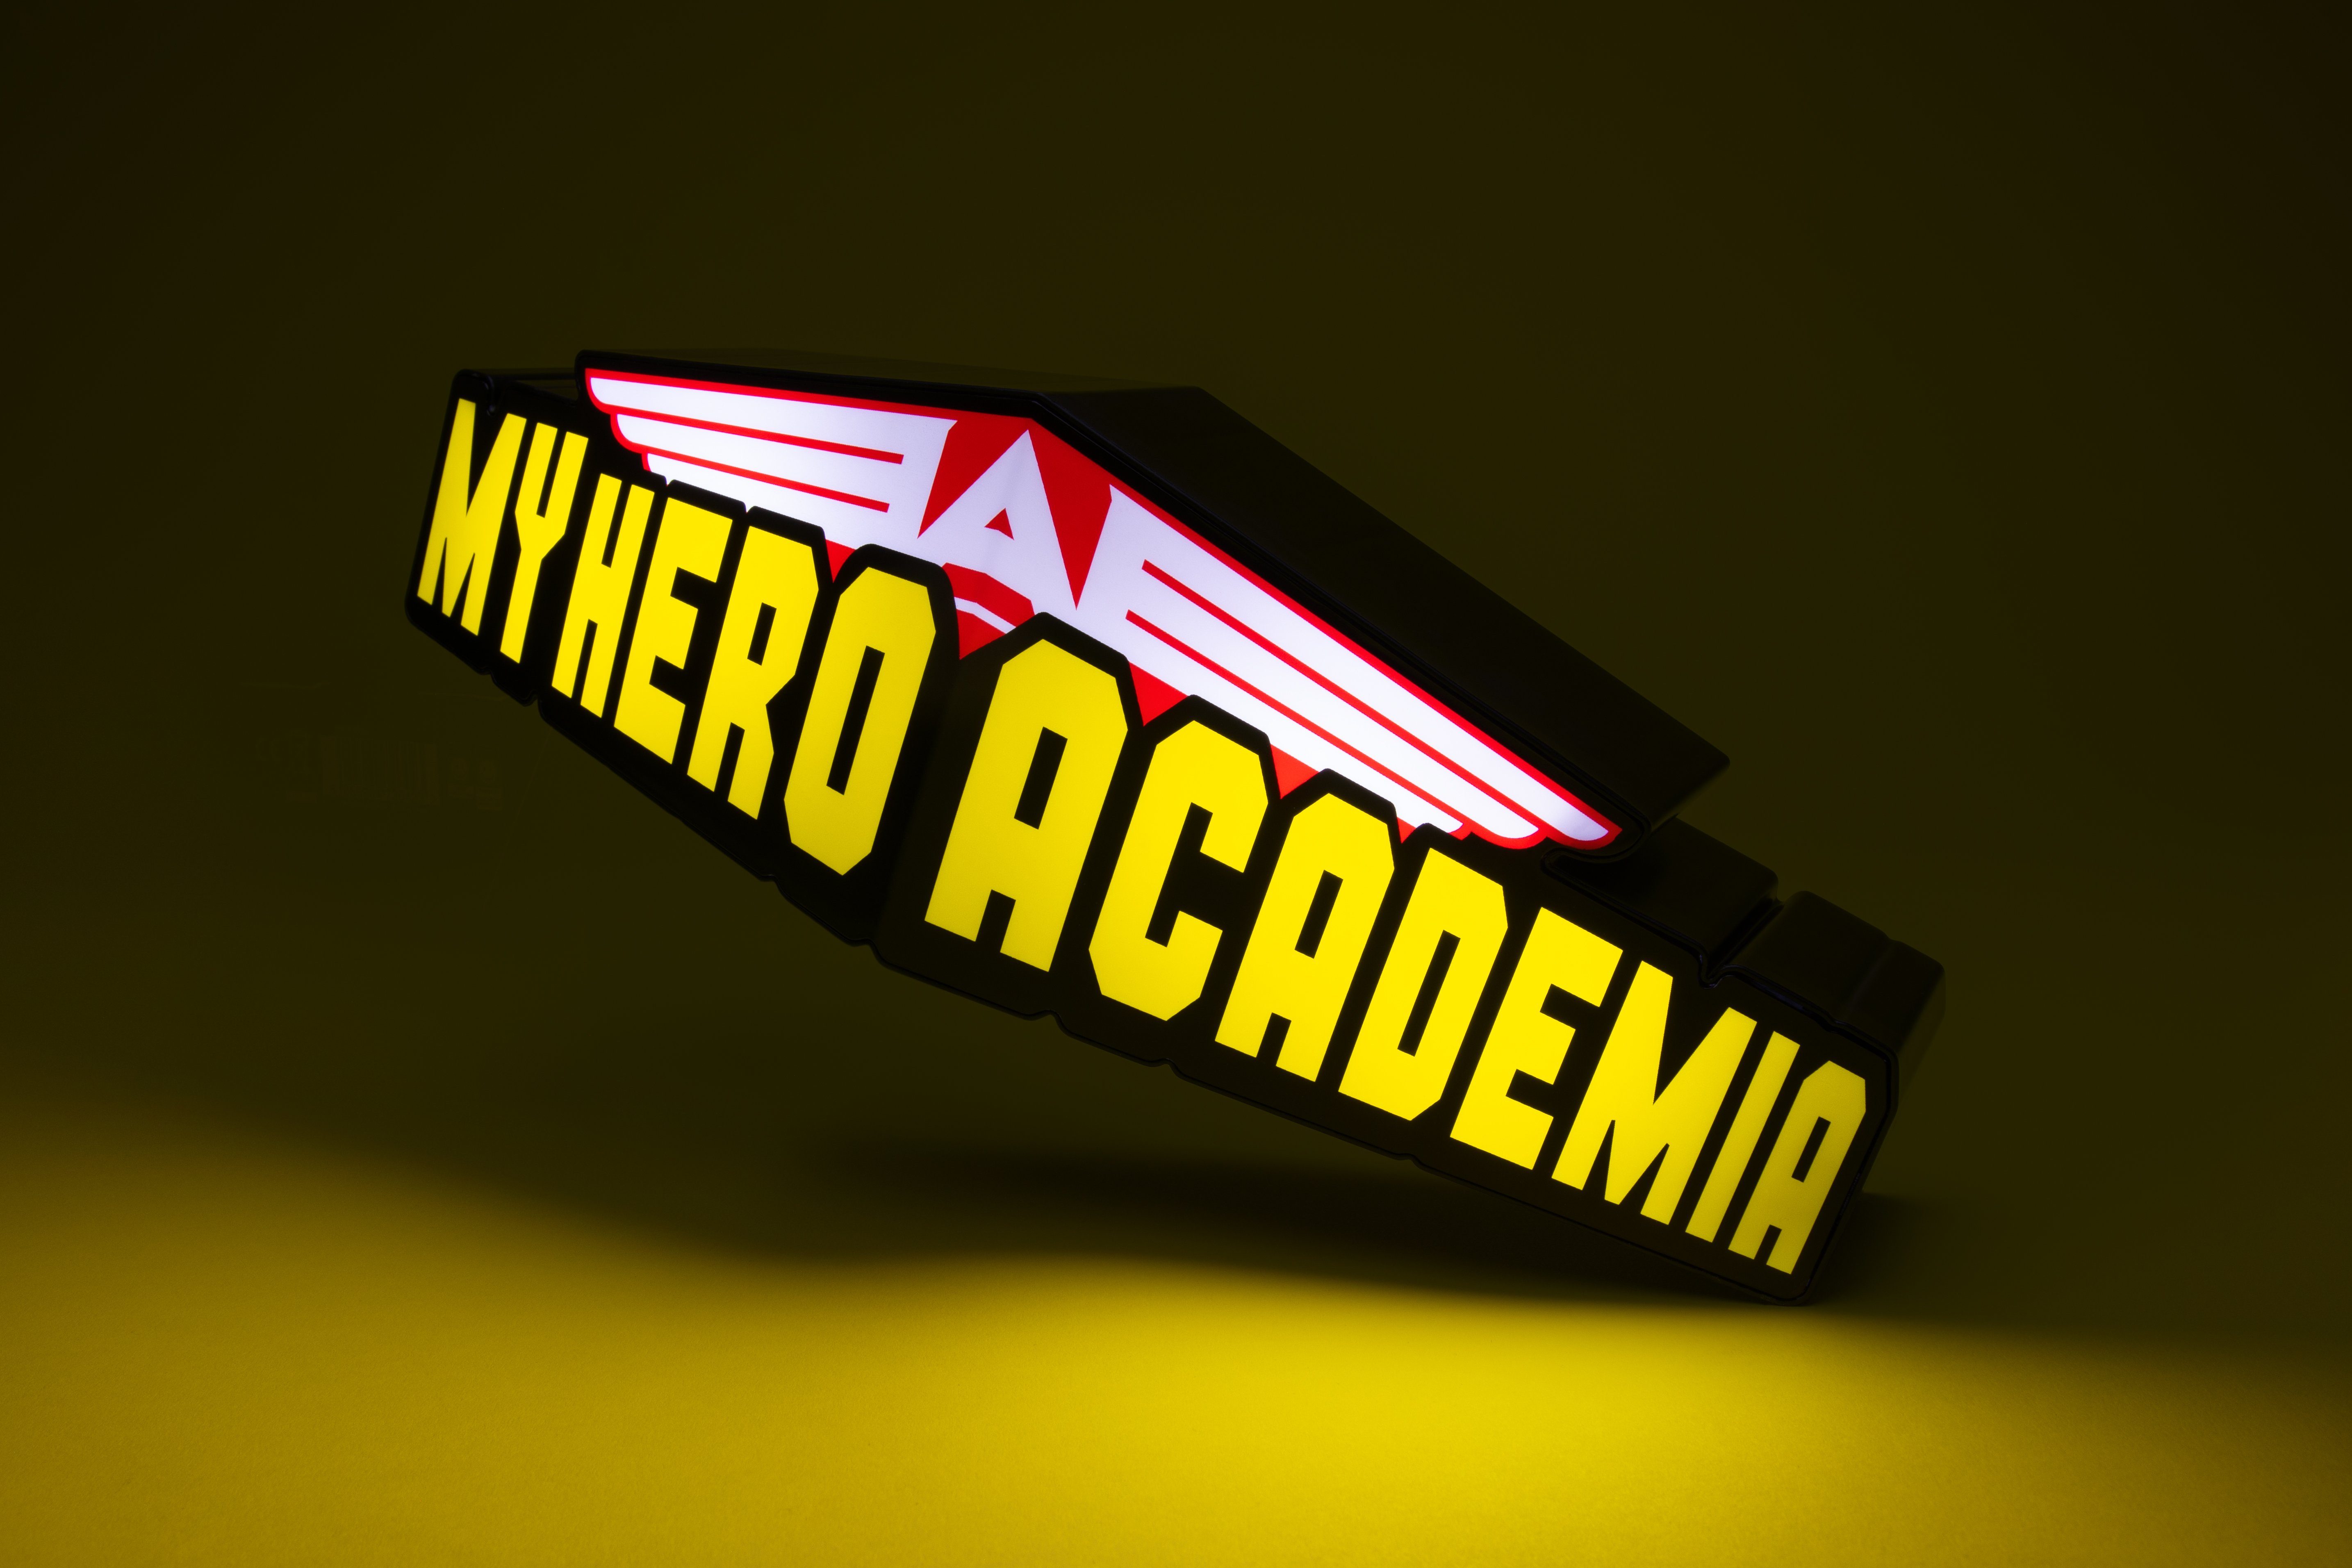 Paladone LED Dekolicht My Logo Leuchte Academia Hero